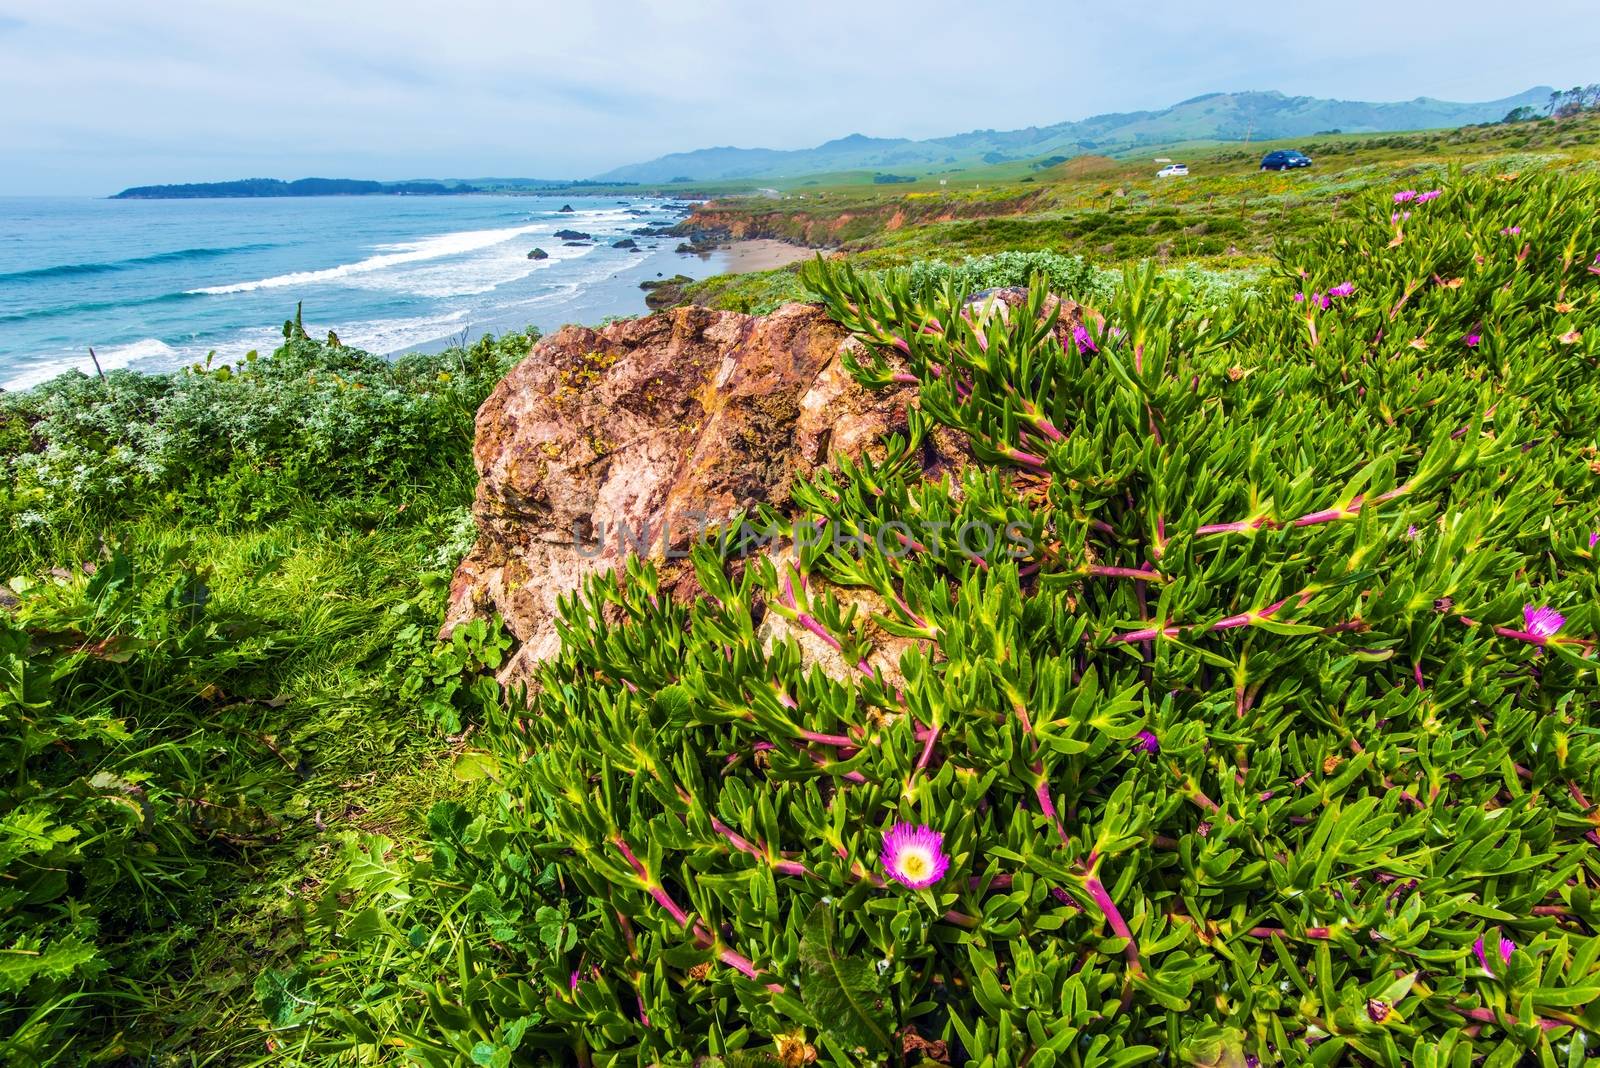 California Coastal Flora. Flowering Plants on the Ocean Cliff. California, United States.